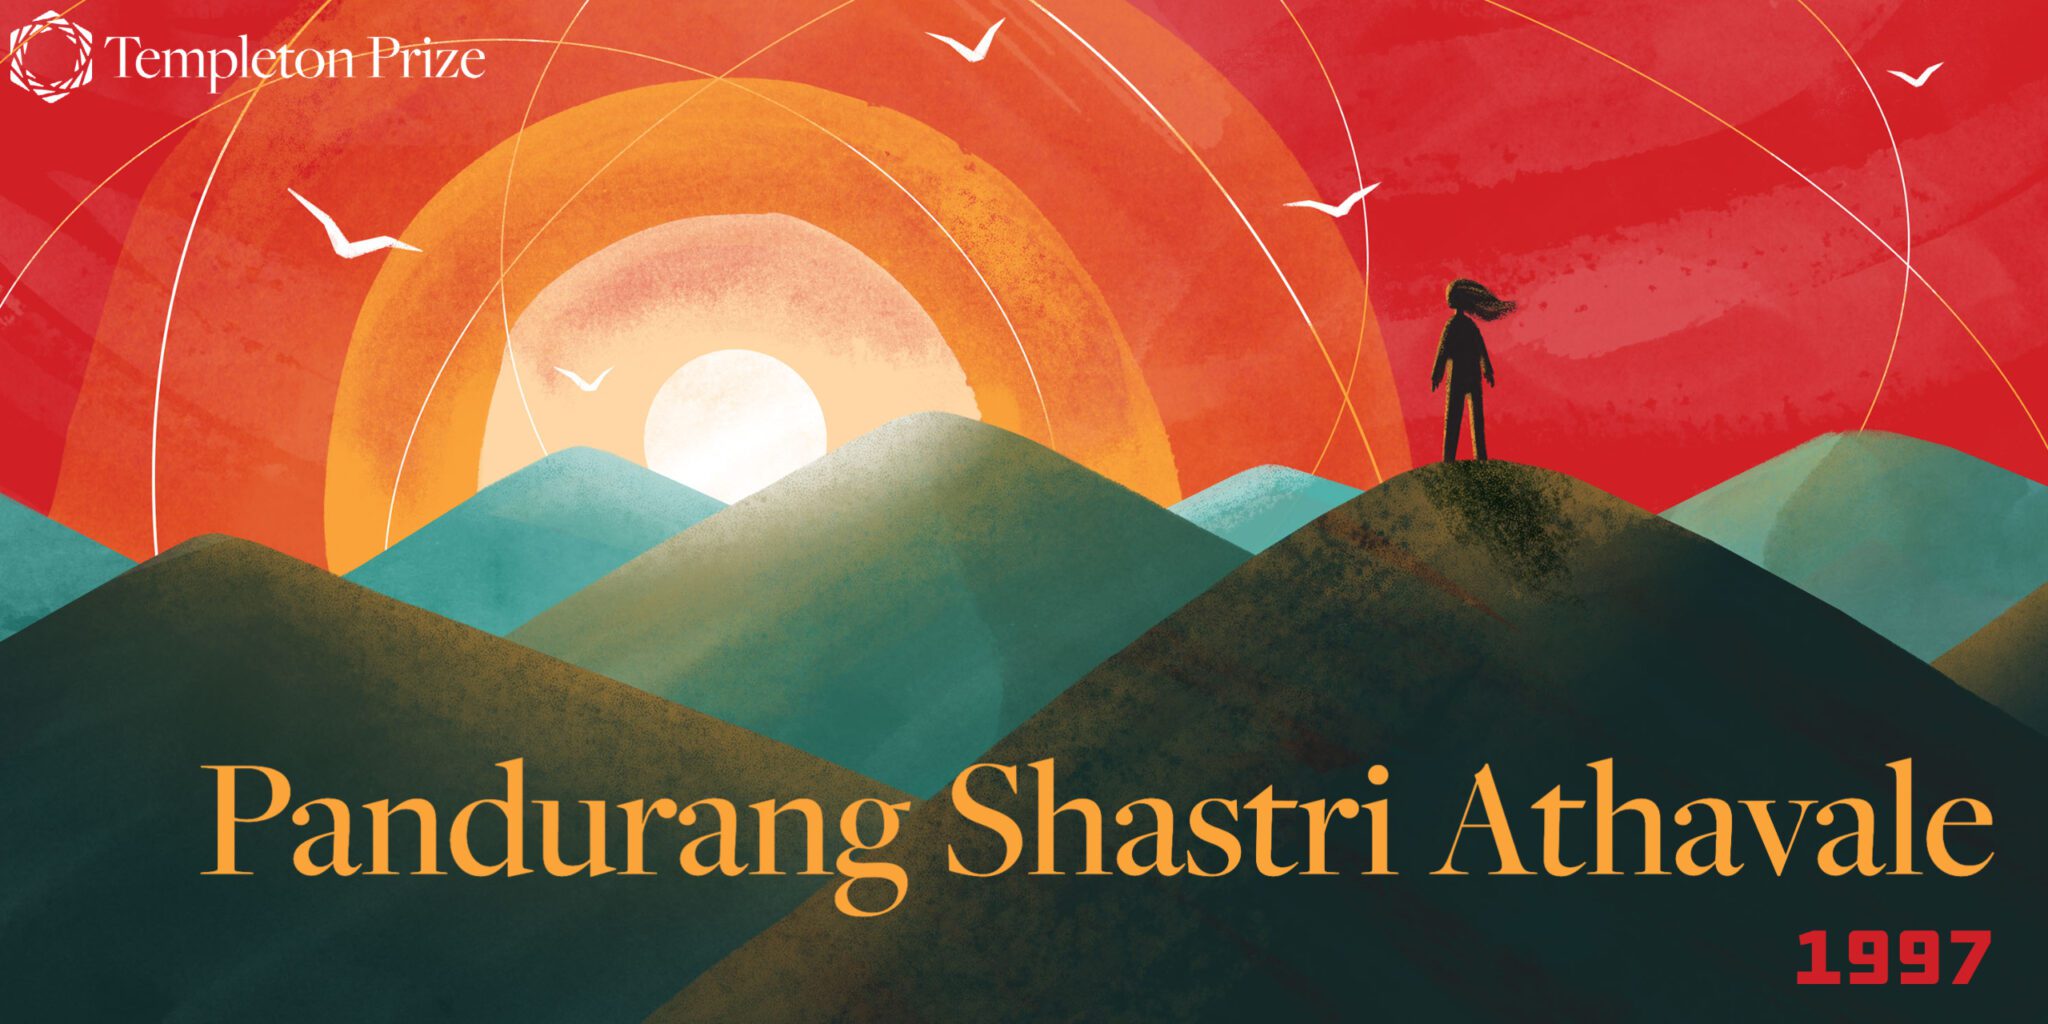 Pandurang Shastri Athavale: A Life of Universal Spirituality and Social Reform